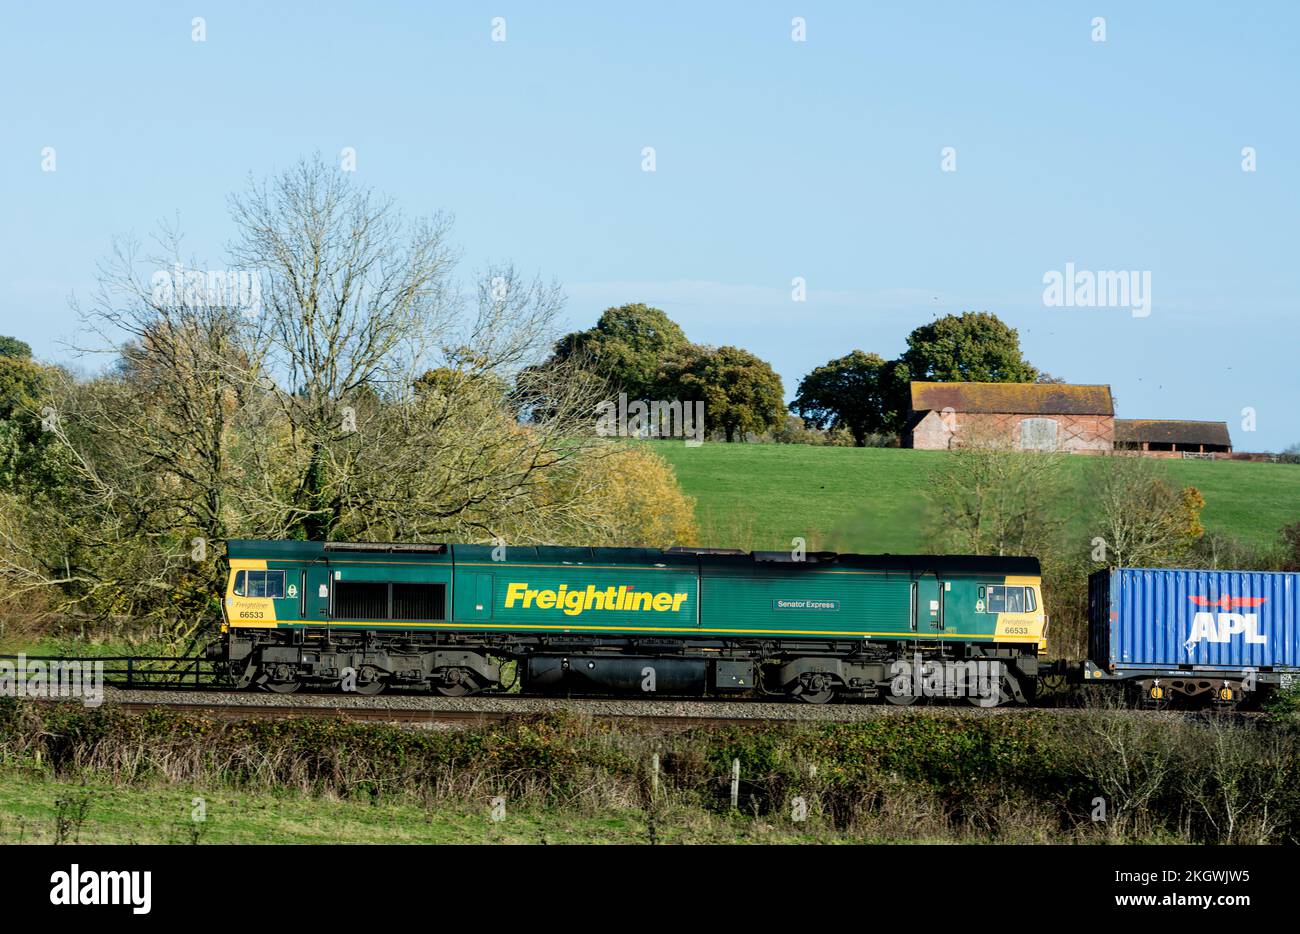 Locomotiva diesel Freightliner classe 66 n. 66533 'Senator Express' che tira un treno freightliner, Warwickshire, Regno Unito Foto Stock